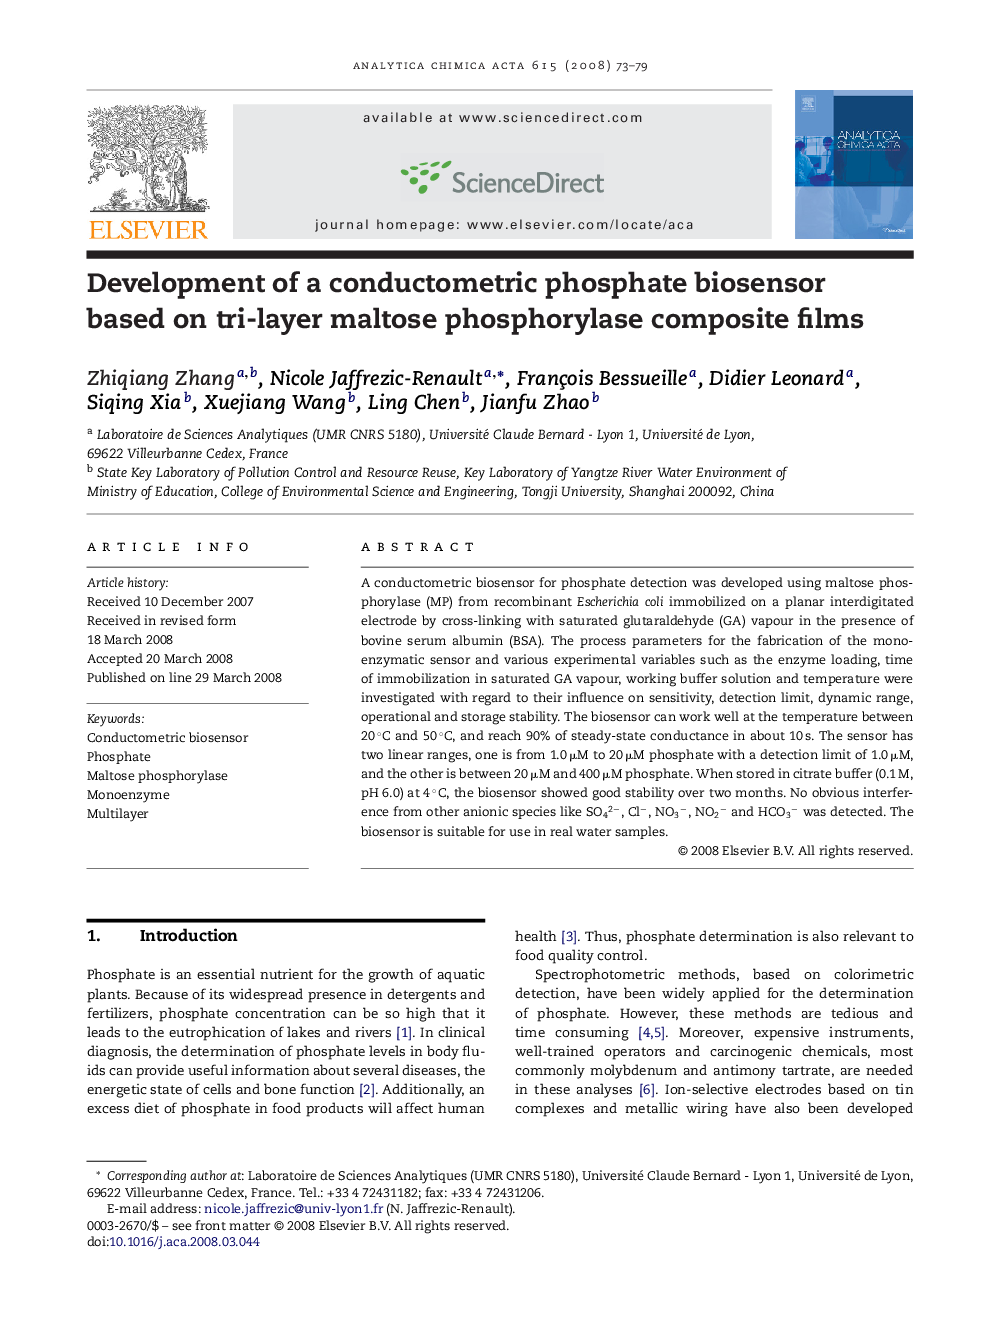 Development of a conductometric phosphate biosensor based on tri-layer maltose phosphorylase composite films